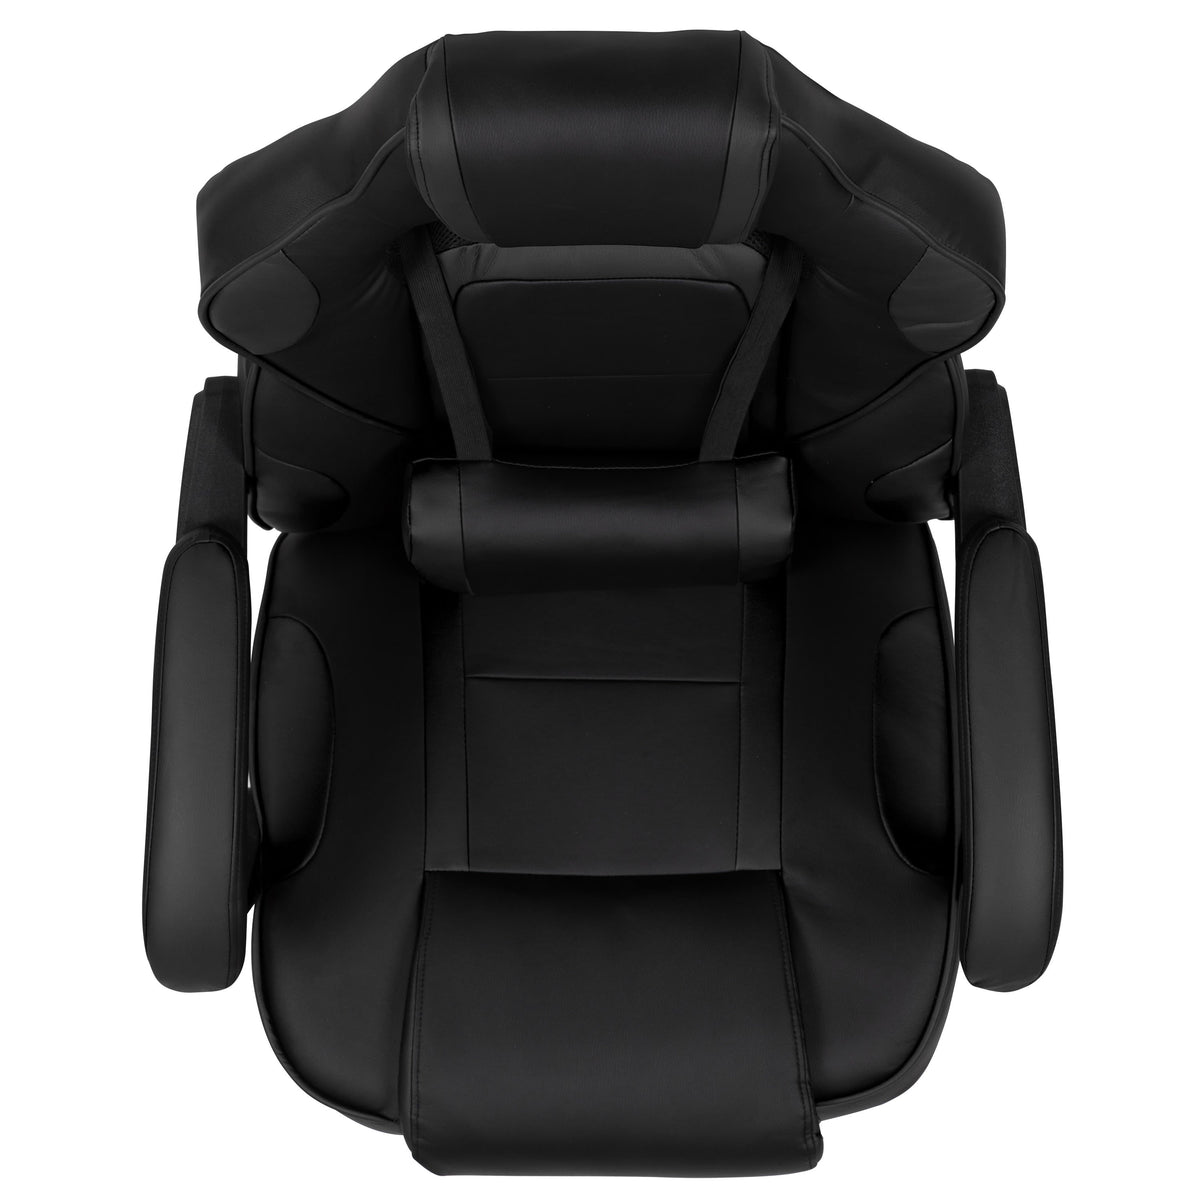 Black |#| Black Ergonomic Gaming Chair -Recline Back/Arms, Footrest, Massaging Lumbar